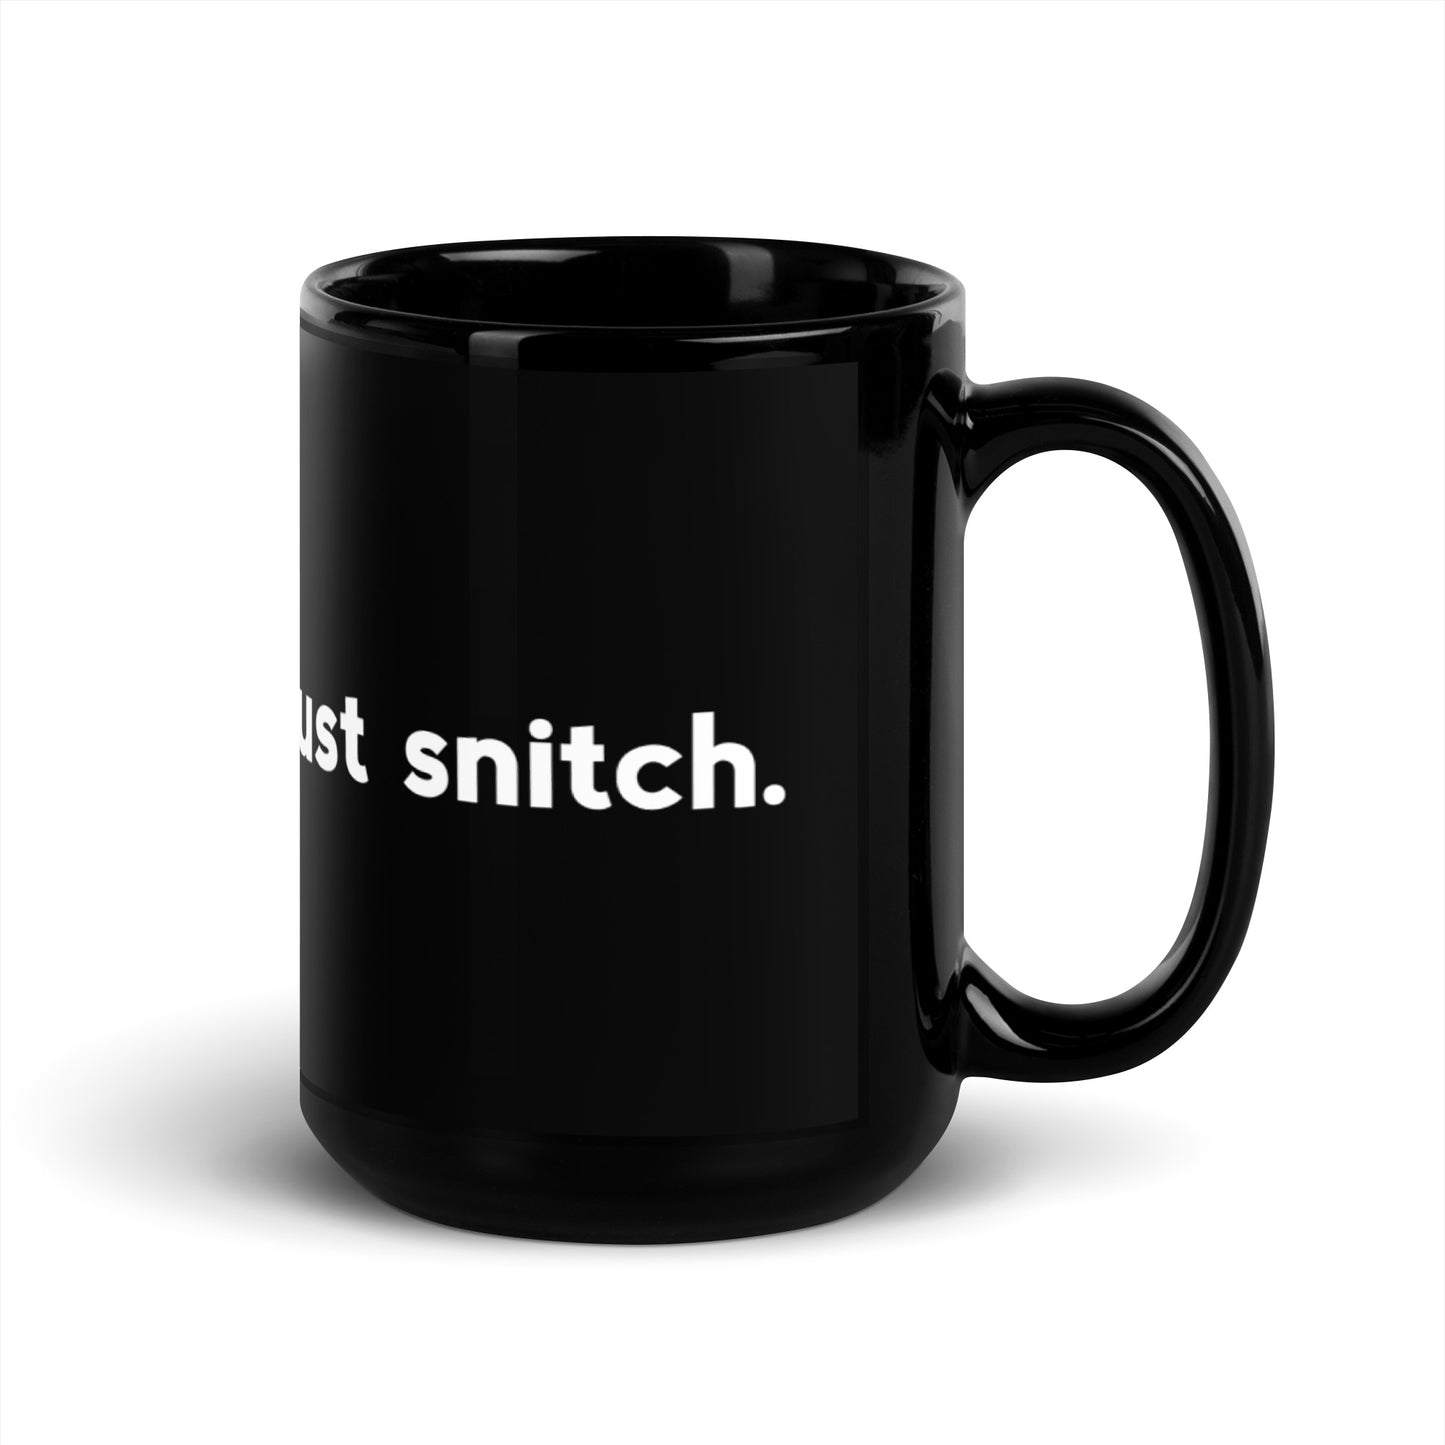 Just Snitch Black Mug - Make Snitching Great Again